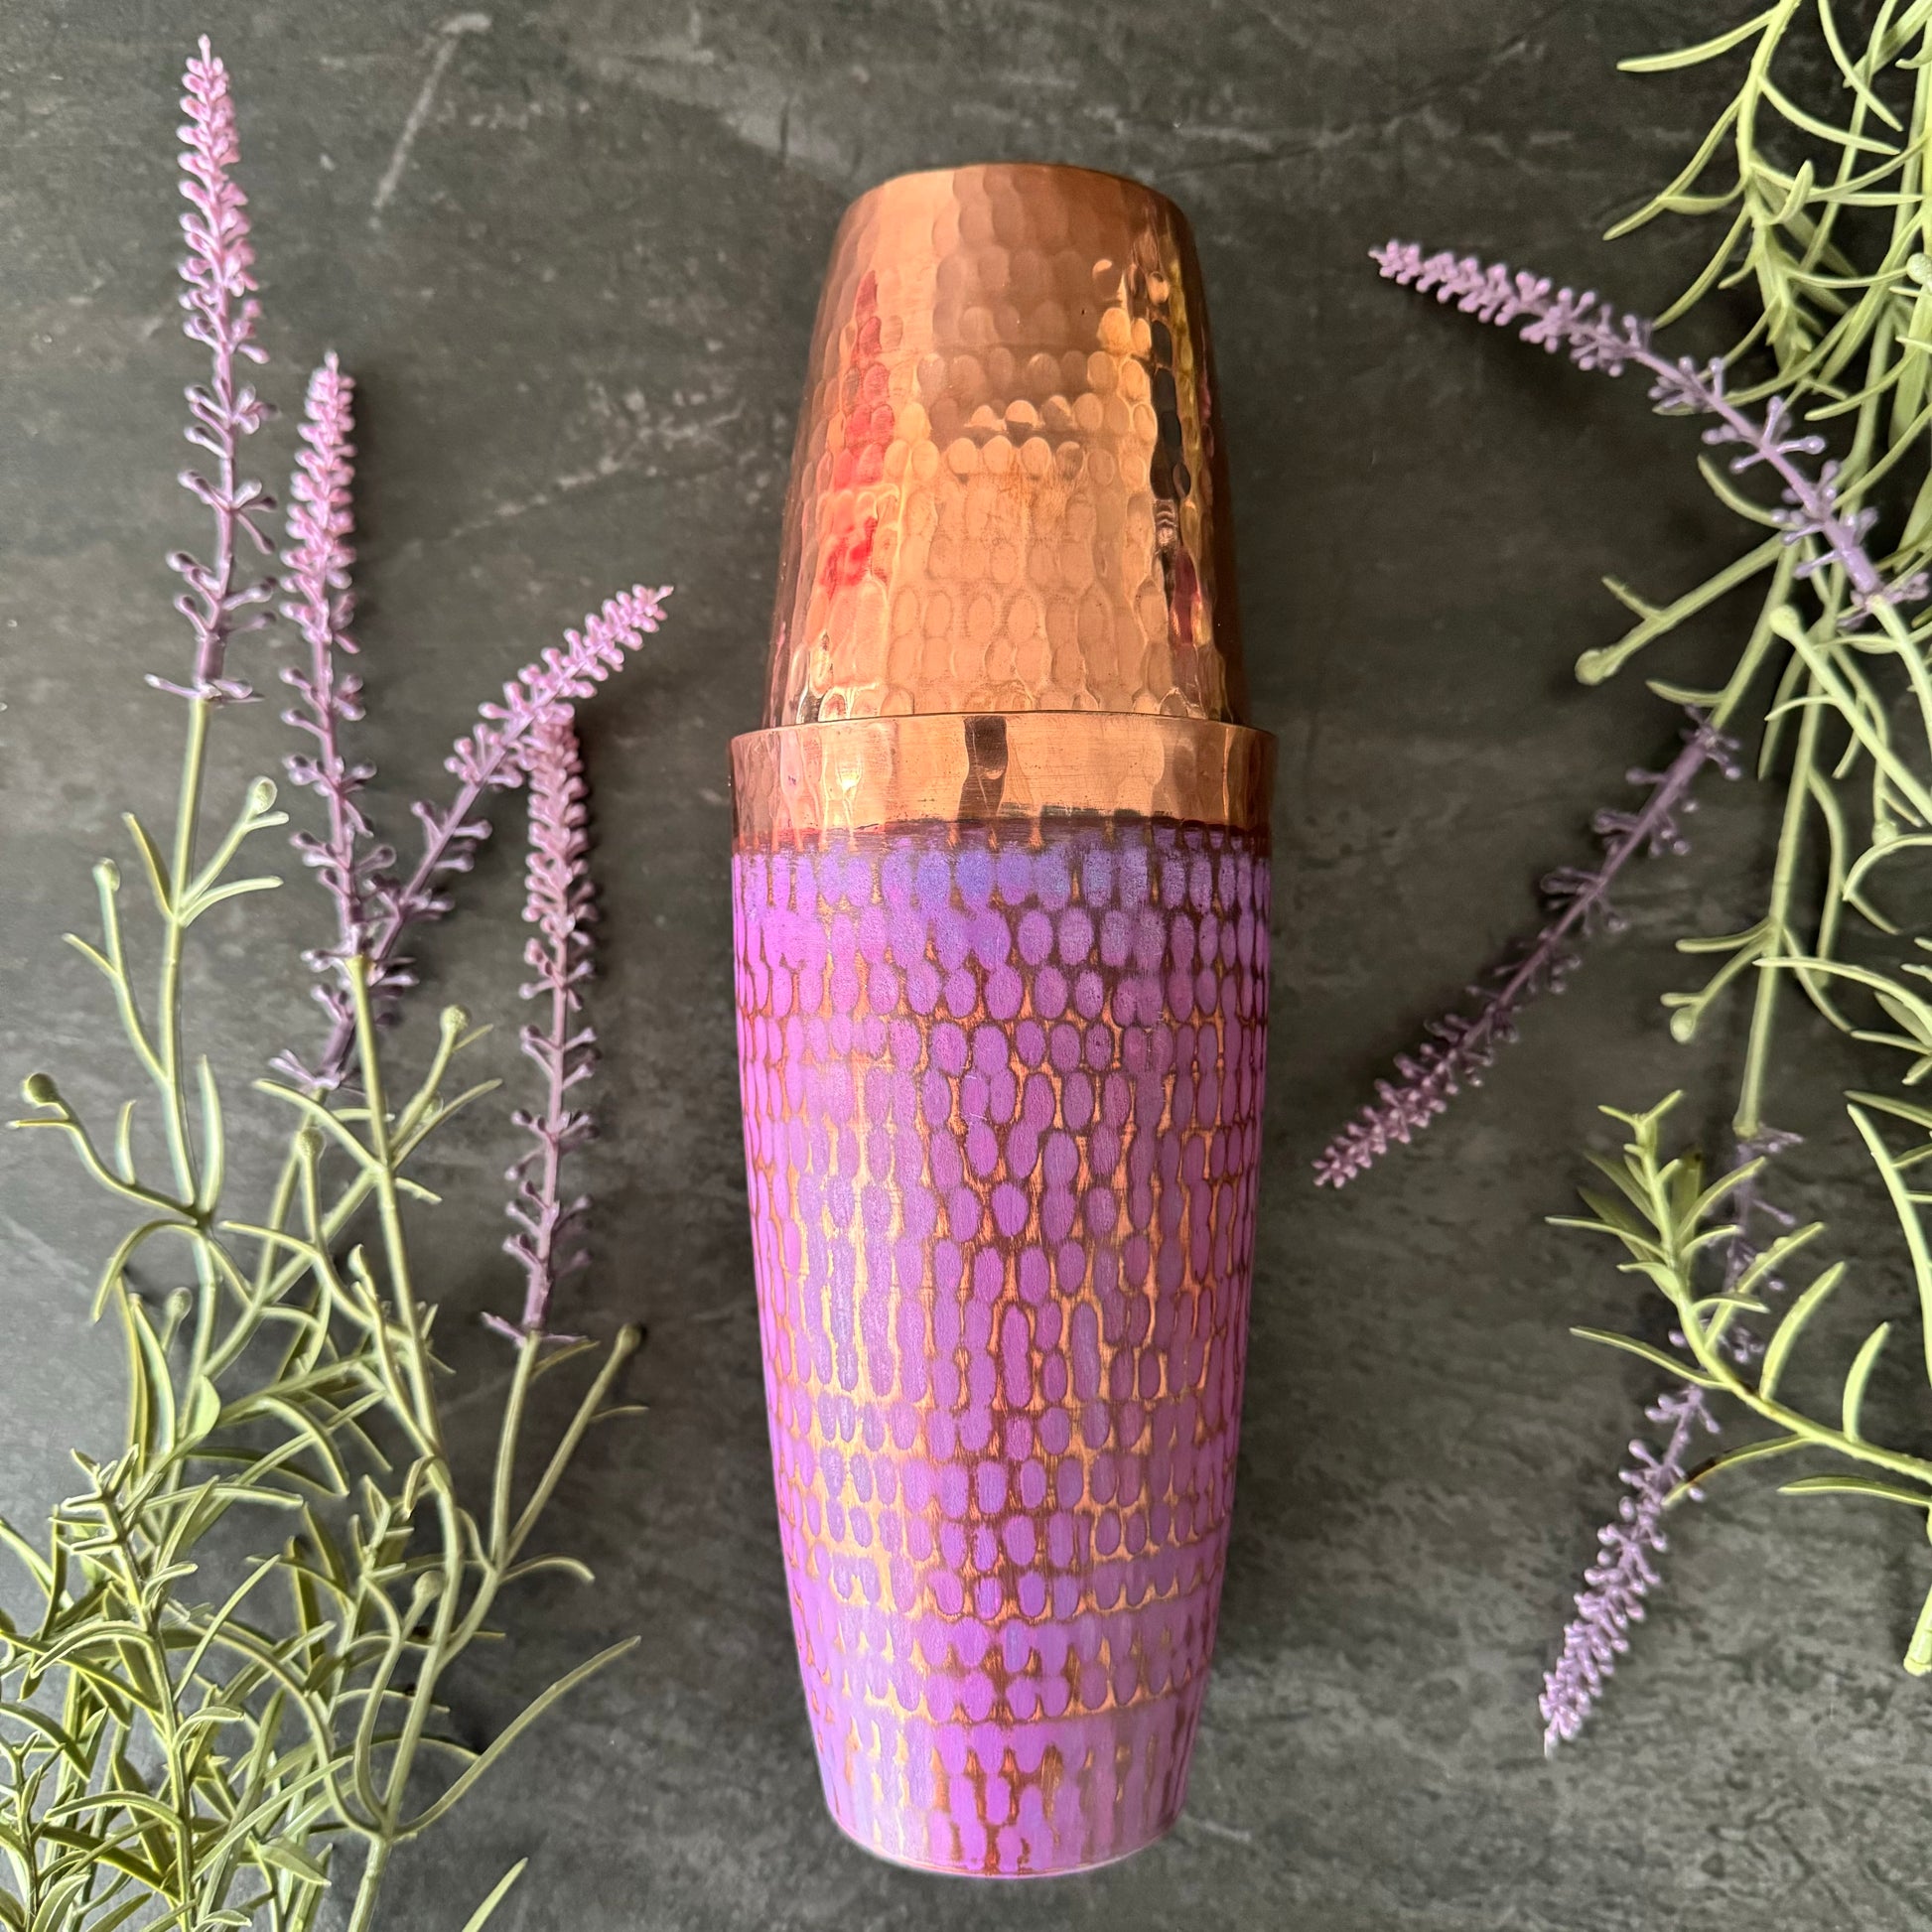 Mexican Handmade Copper 24 oz. Boston Shaker- Lavender CoLores Decor | Mexican Artisan Decor